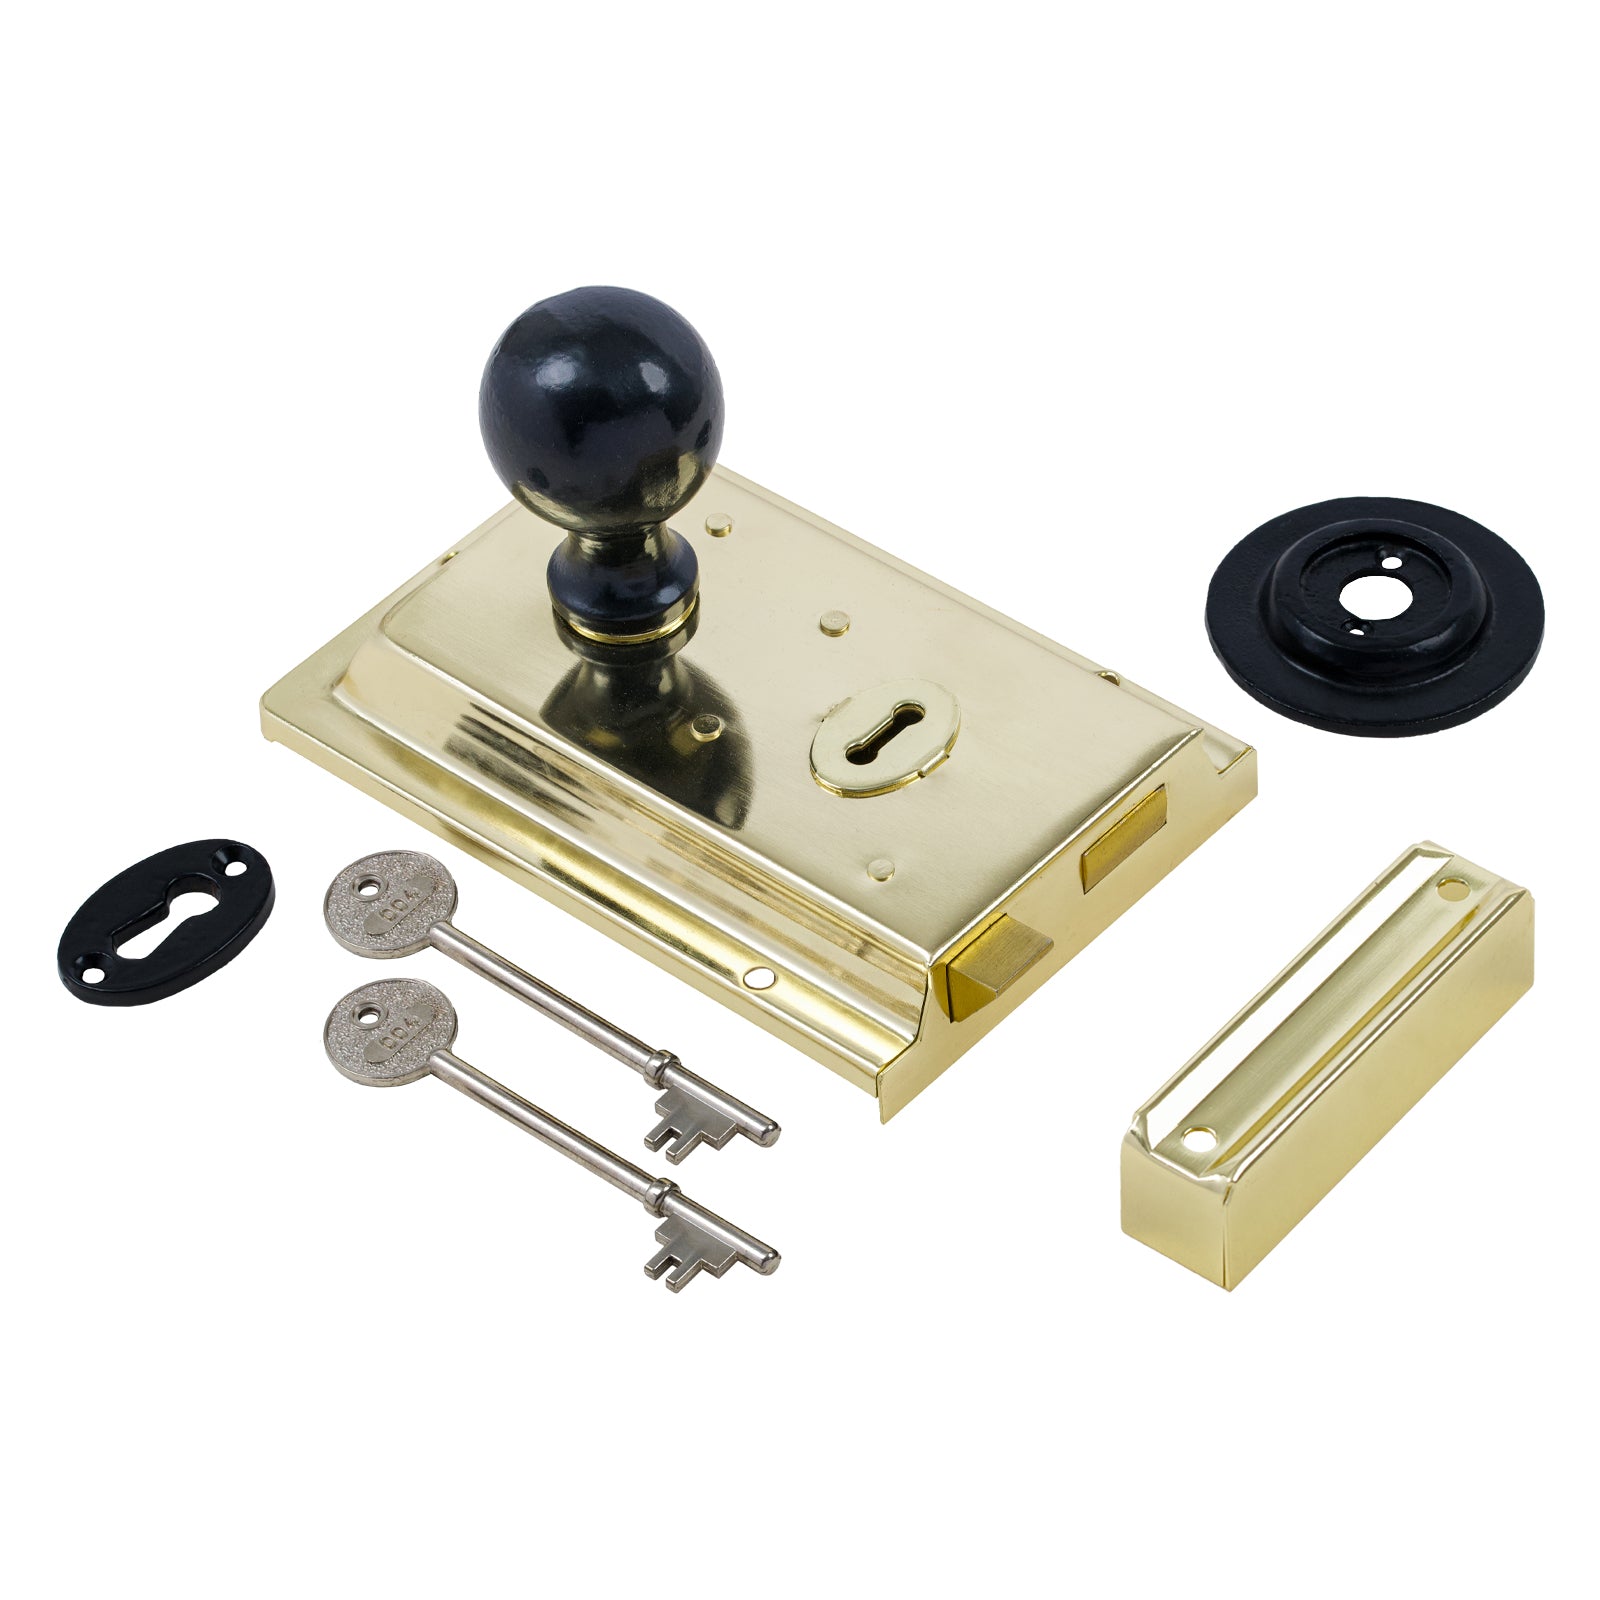 SHOW Round Door Knob Set - Black On Polished Brass Rim Lock